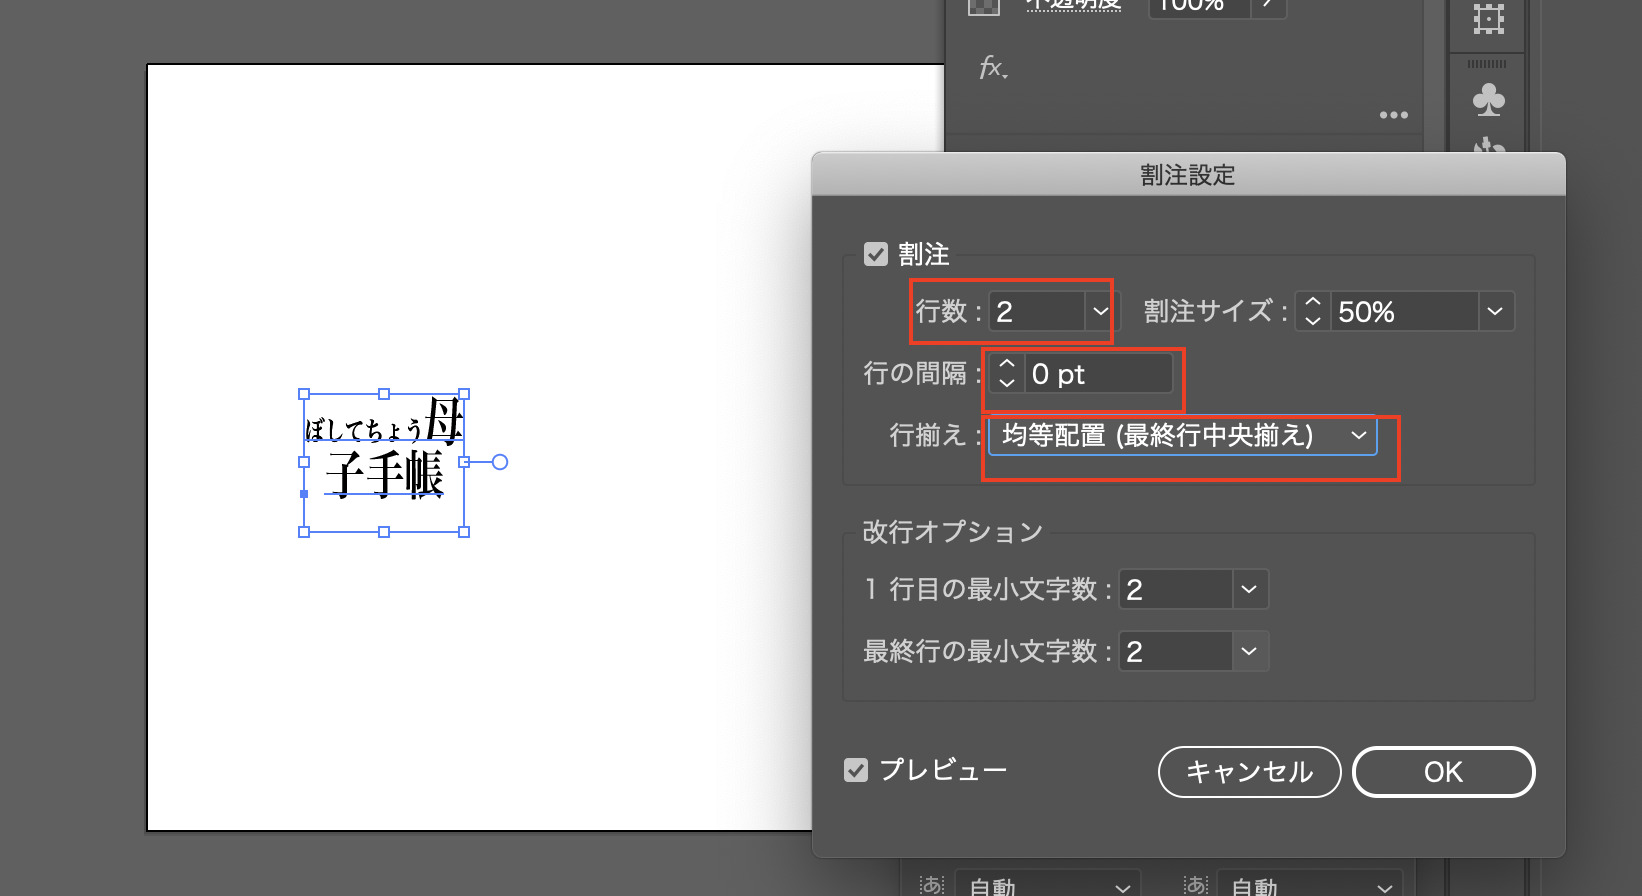 Illustrator 漢字にふりがなを振る方法 ルビを振る ミトラボ